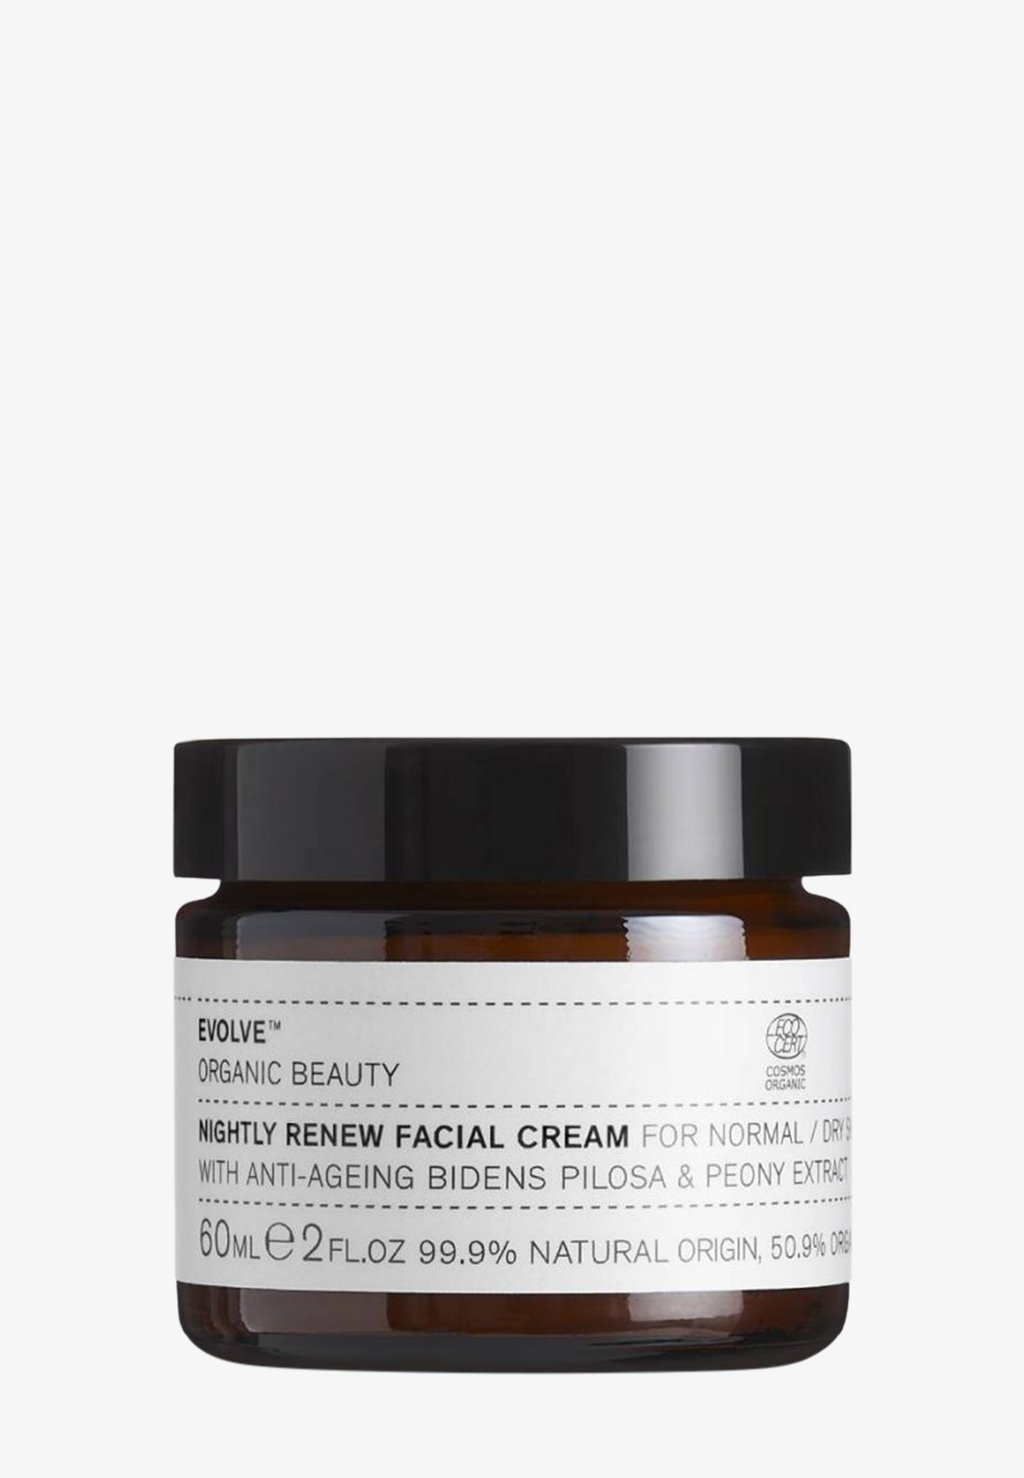 Дневной крем Nightly Renew Facial Cream Evolve Organic Beauty evolve daily renew facial cream 60ml